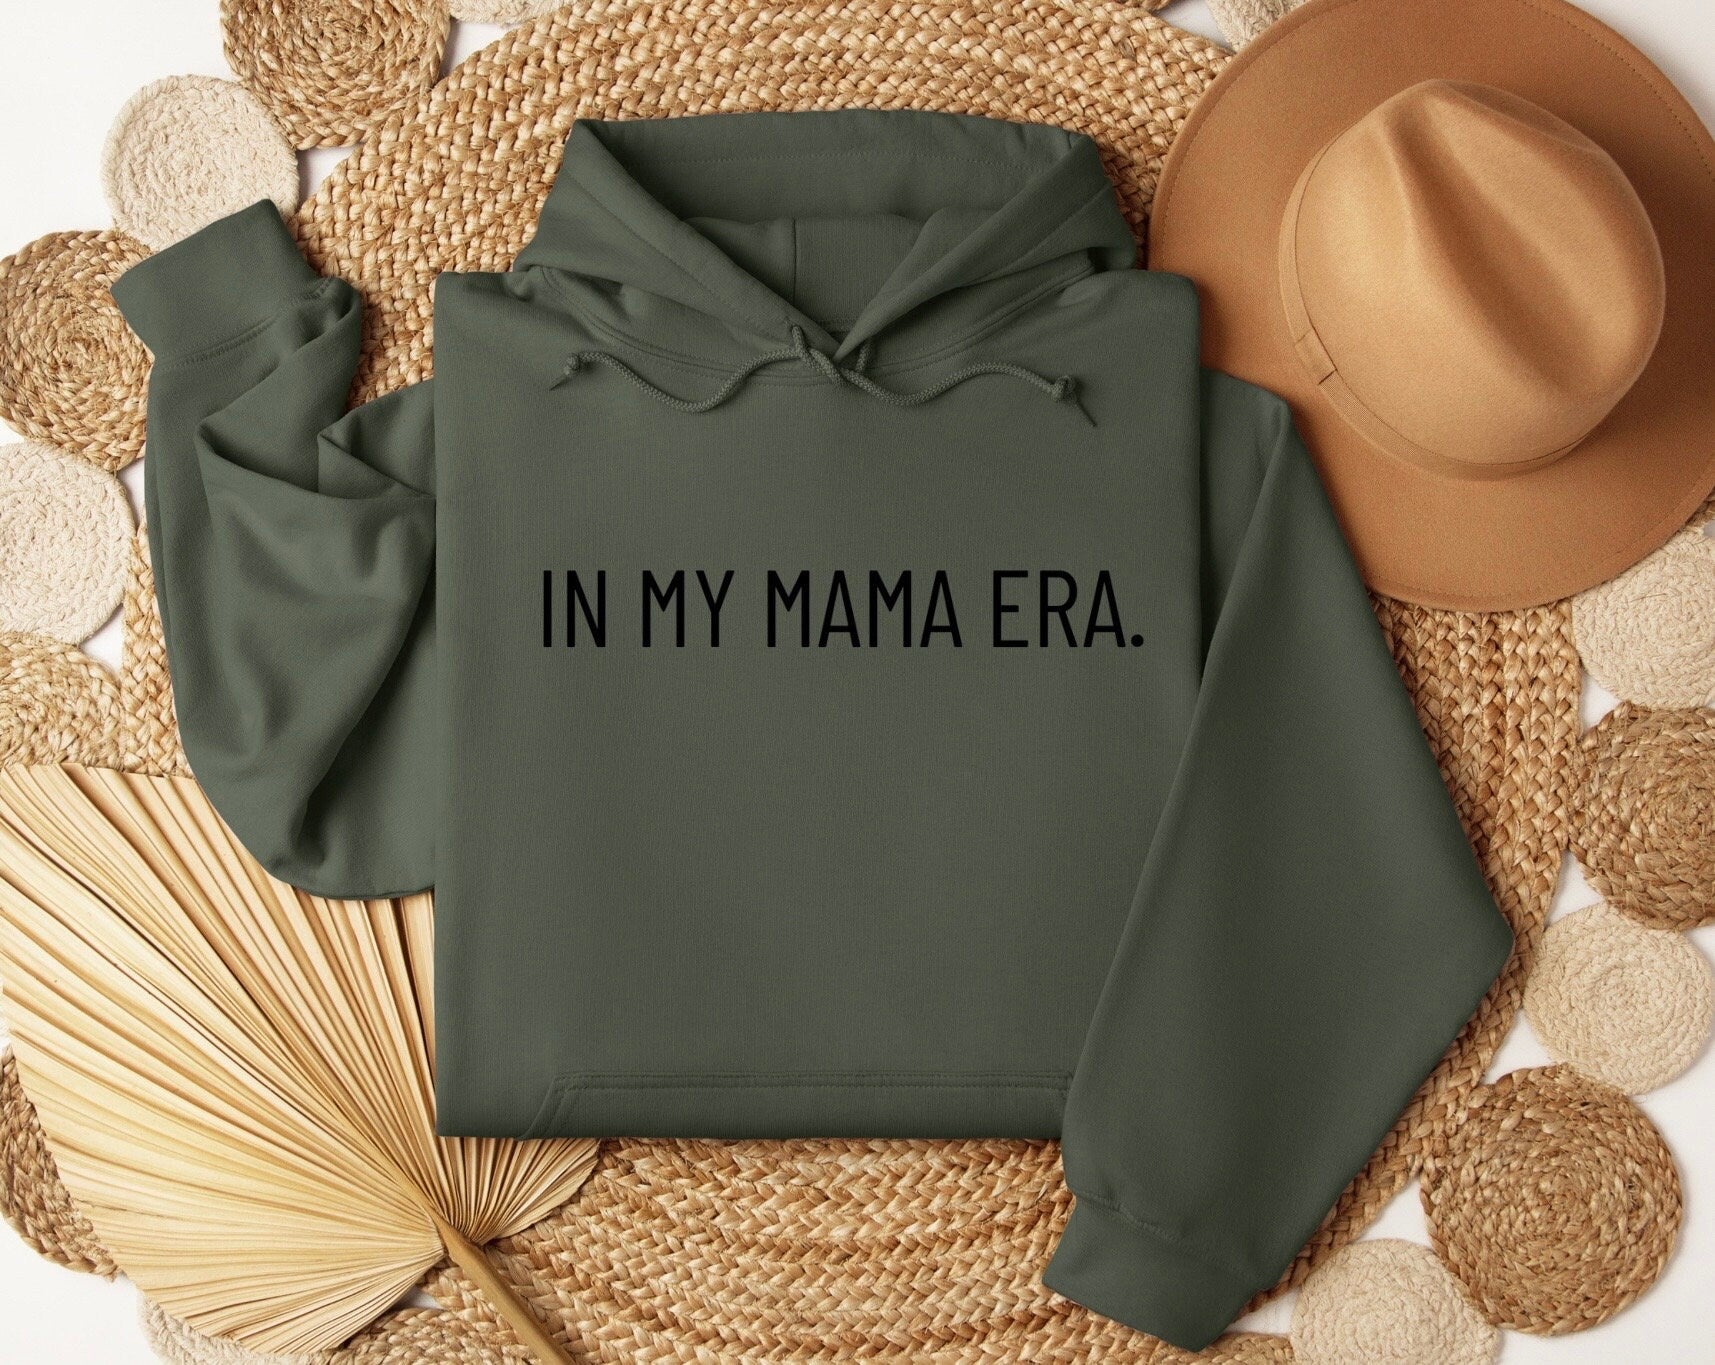 In My Mama Era Sweatshirt, In My Mama Era Shirt, In My Mama Era Crewneck, In My Mama Era Sweater, Oversized Sweater, Comfy Sweatshirt, Gift